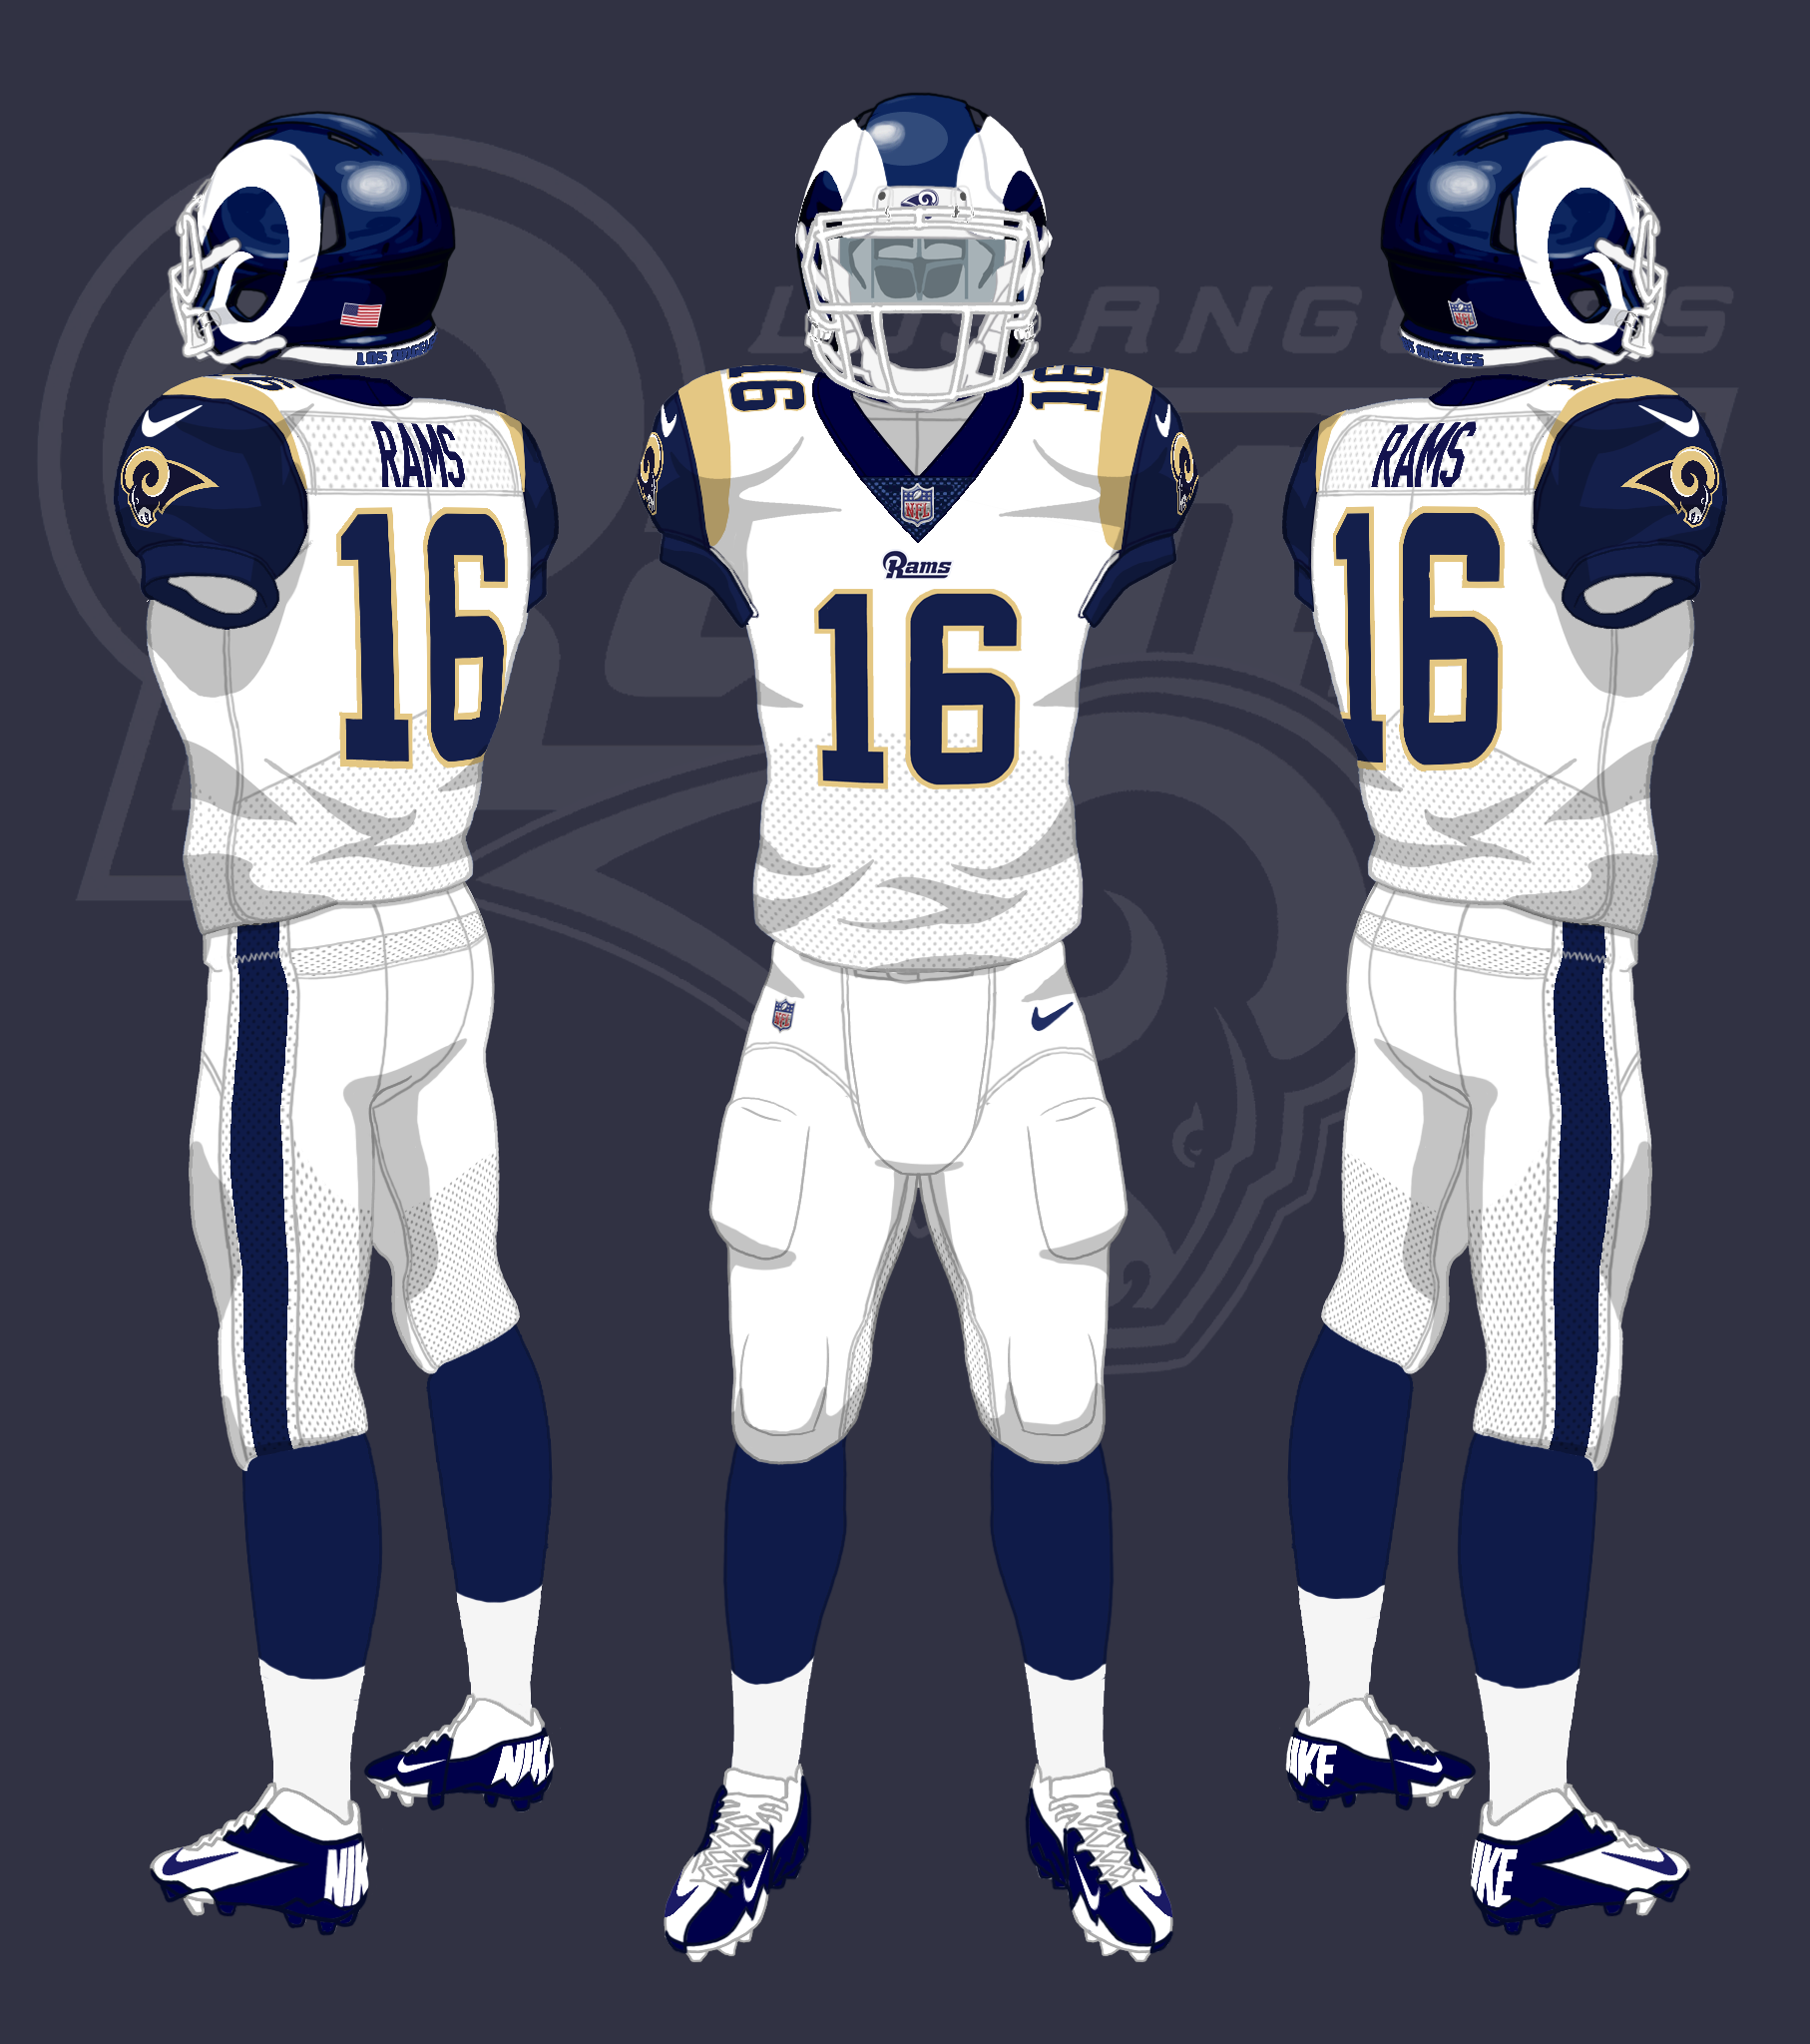 L.A. Rams 2017 - 2018 Uniforms by CoachFieldsOfNOLA on DeviantArt